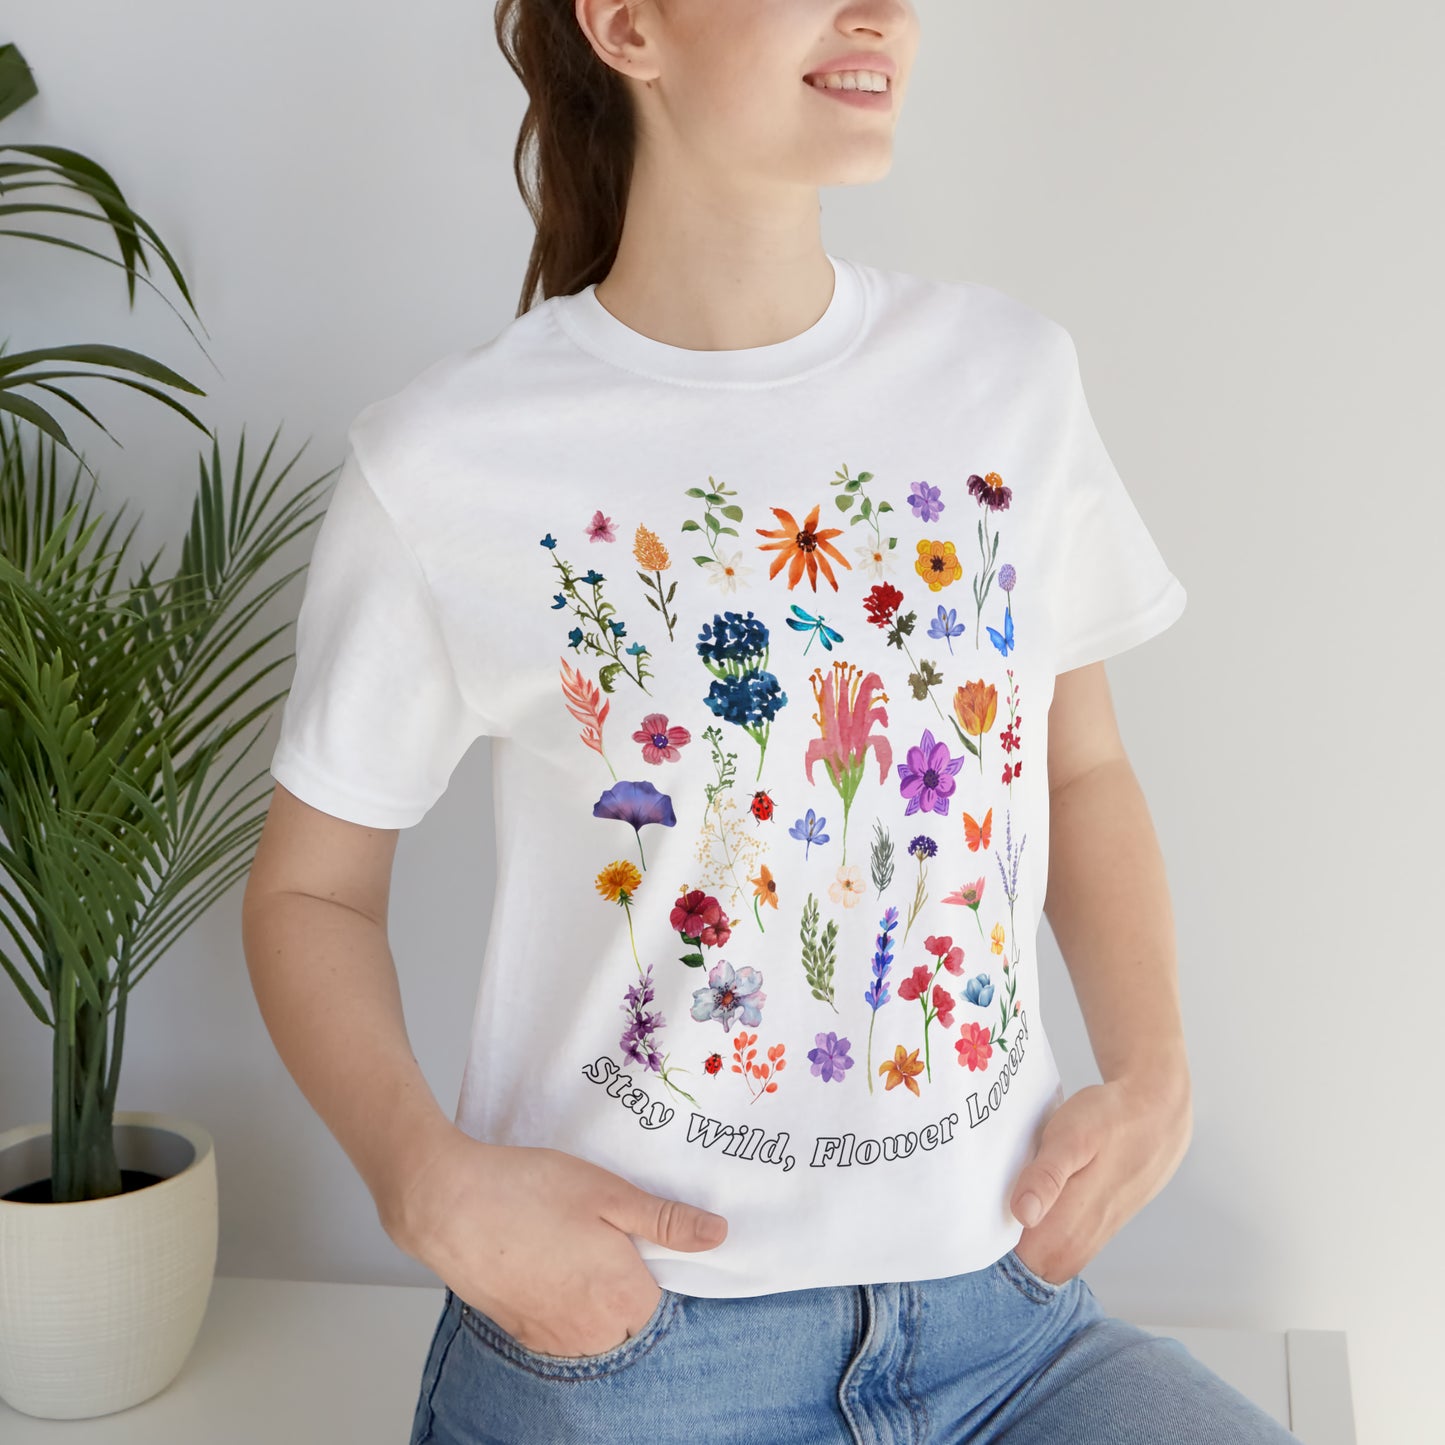 Wildflower Tshirt Flowers Shirt Floral Tshirt Flower Shirt Gift for Women - Ladies Shirts Best Friend Gift, Plant Mom Stay Wild flower lover